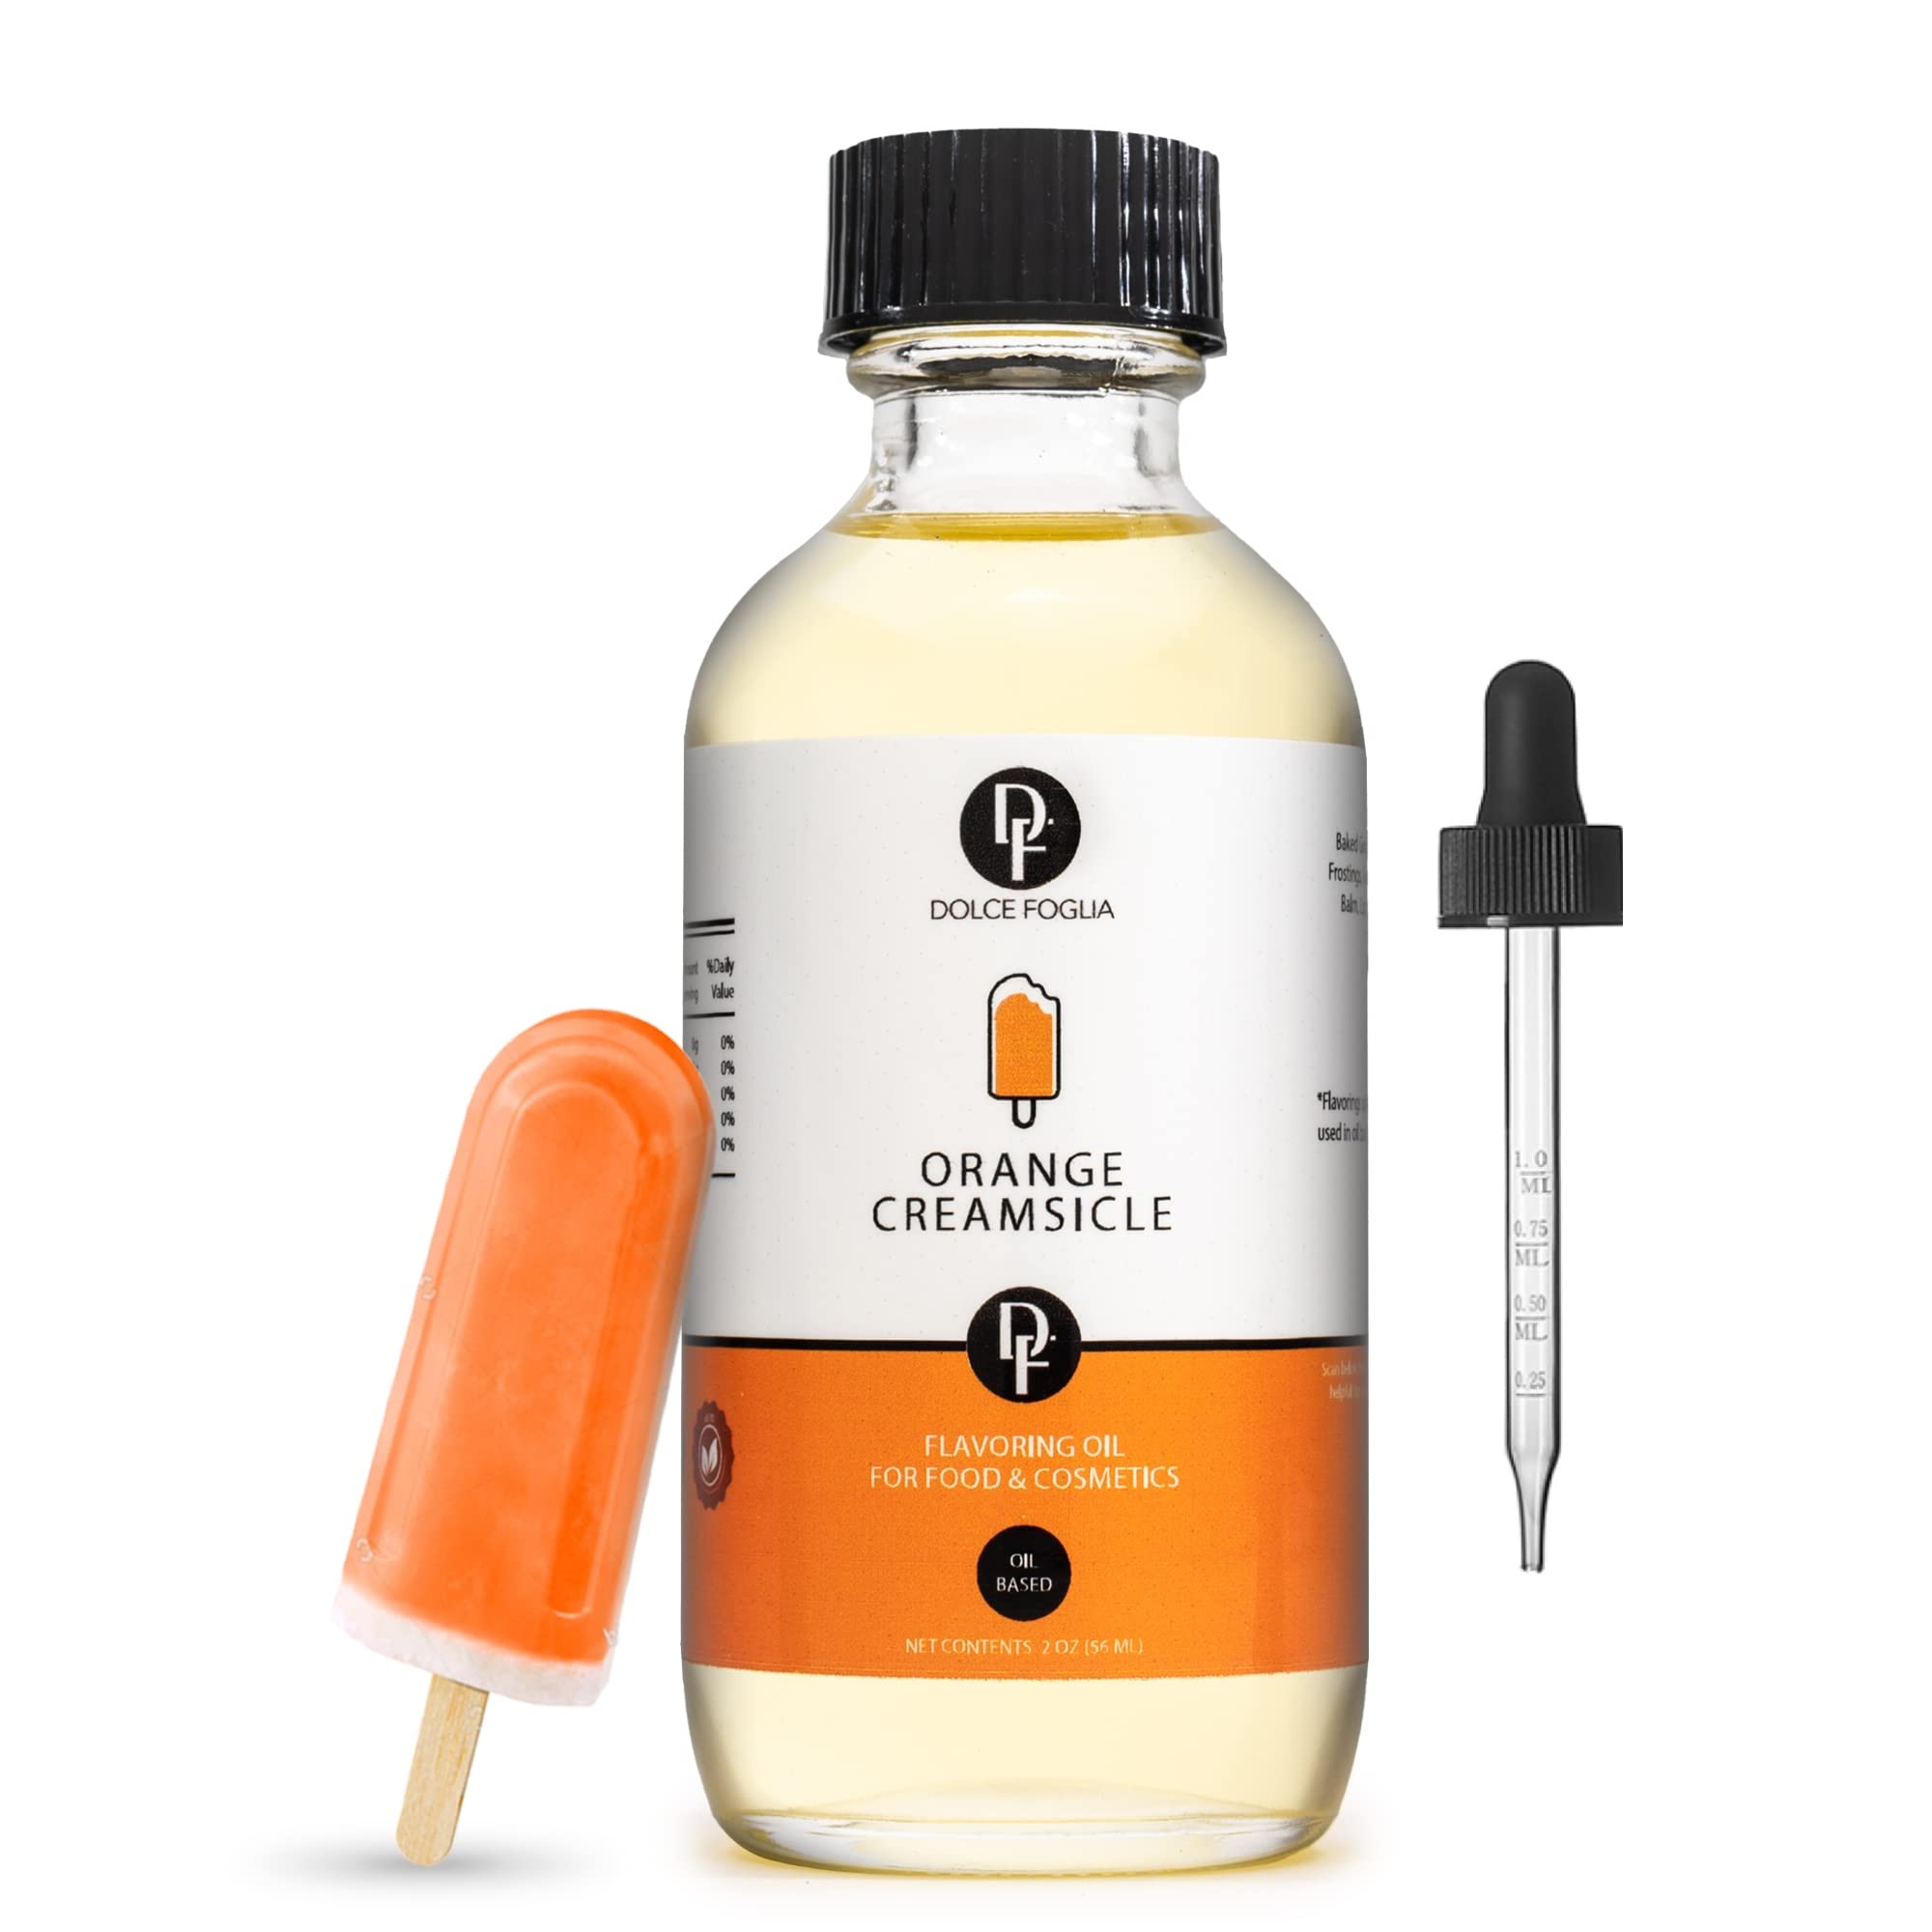 Dolce Foglia Orange Creamsicle Flavoring Oils - 2 Oz. Multipurpose